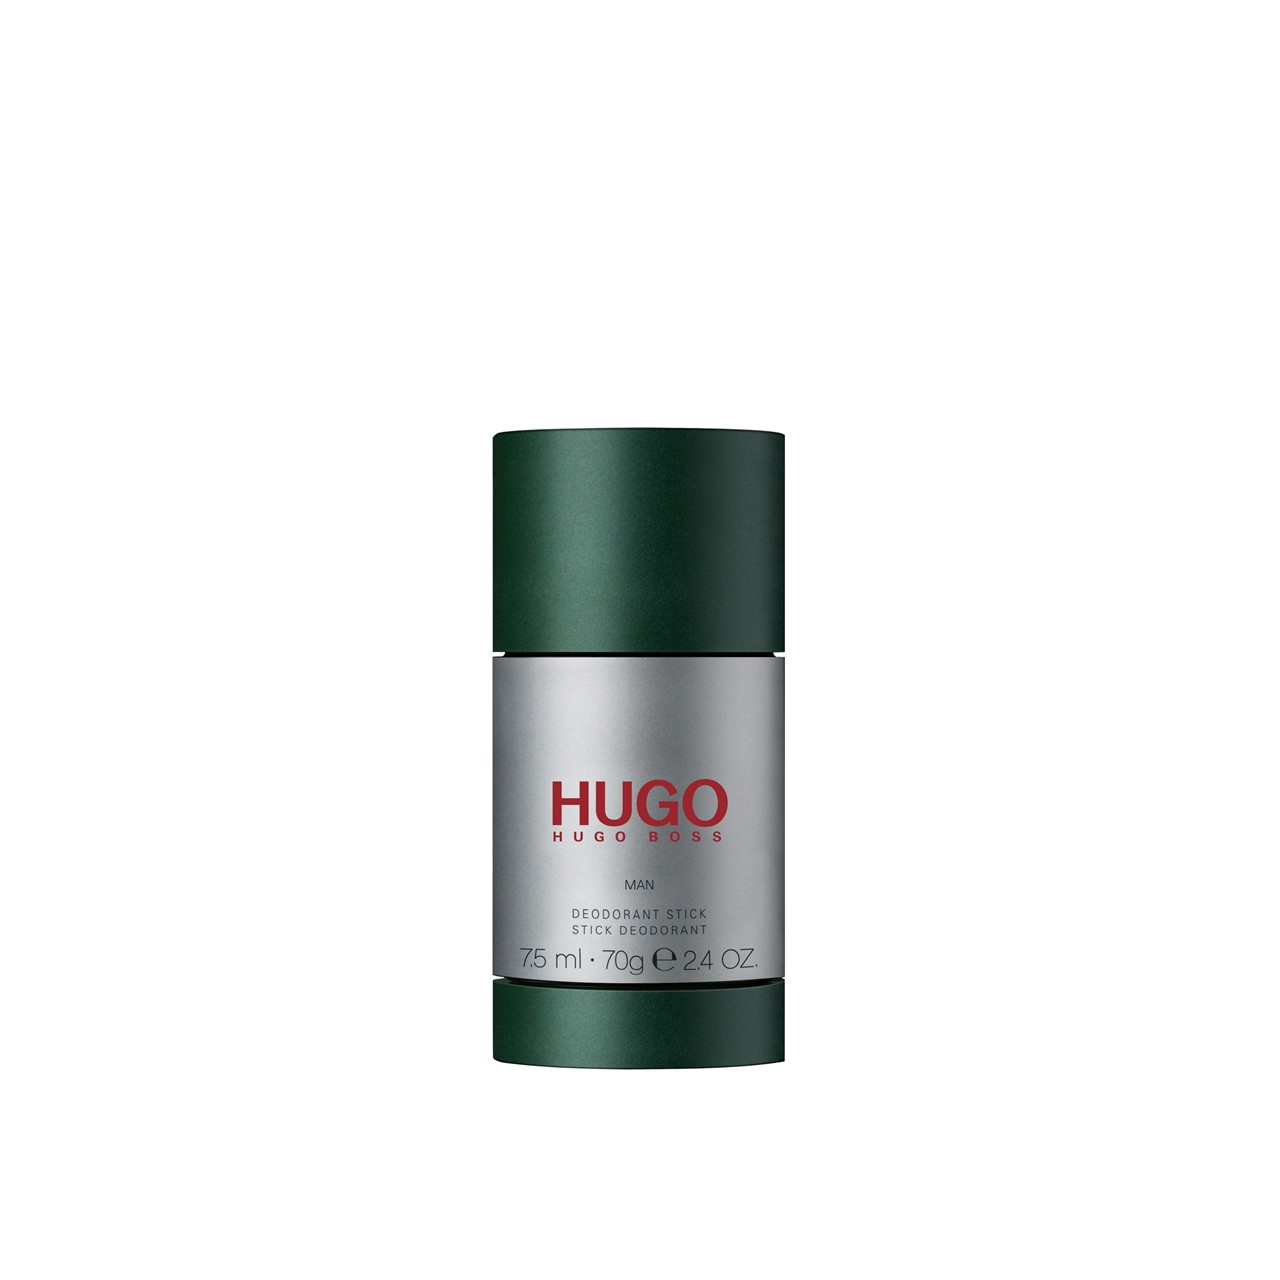 Hugo Boss Hugo Man Deodorant Stick 75ml (2.54fl oz)